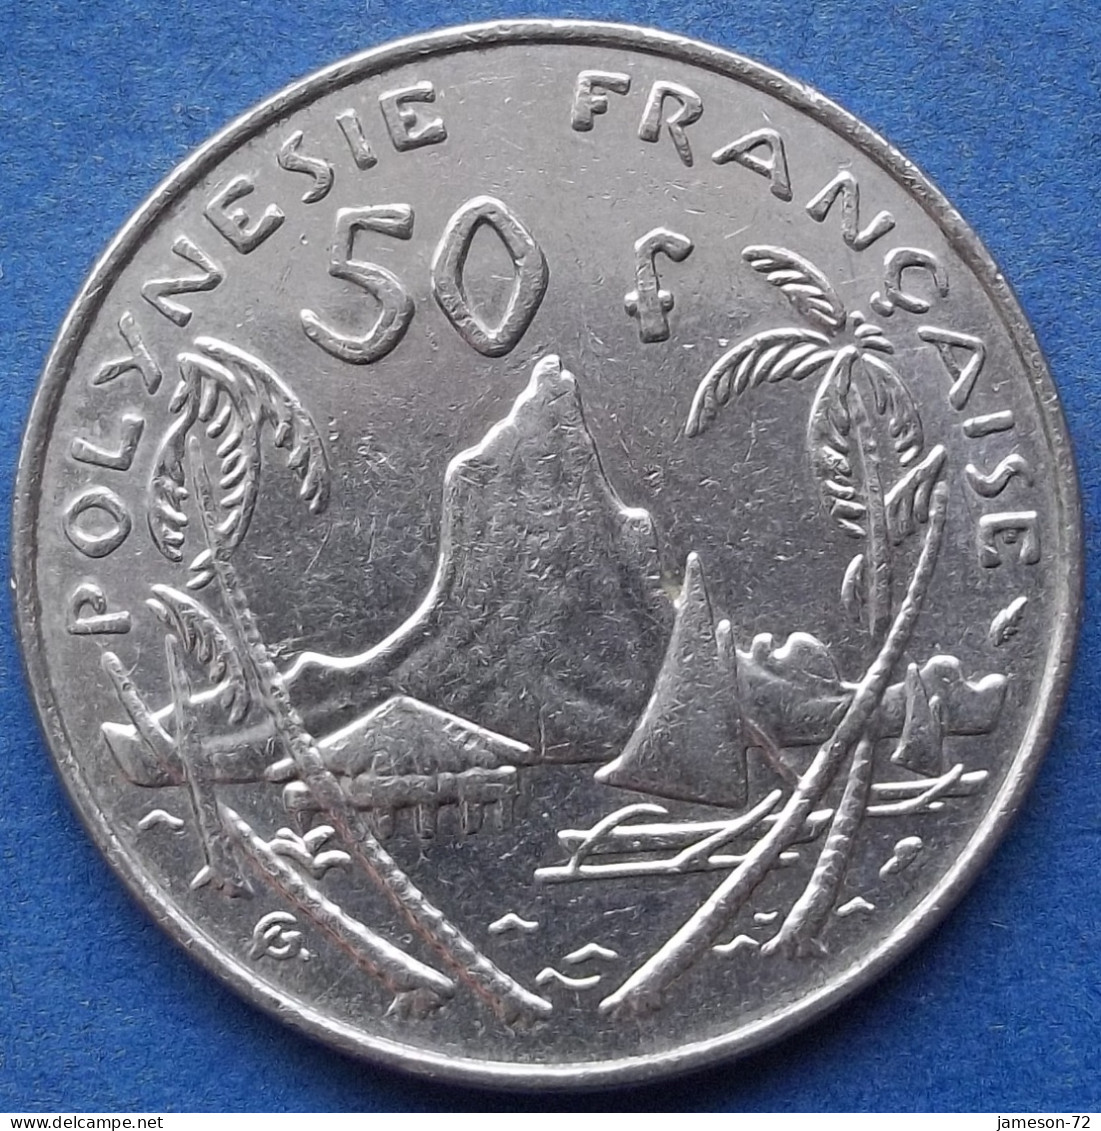 FRENCH POLYNESIA - 50 Francs 1988 "Morea Harbor" KM# 13 French Overseas Territory - Edelweiss Coins - French Polynesia